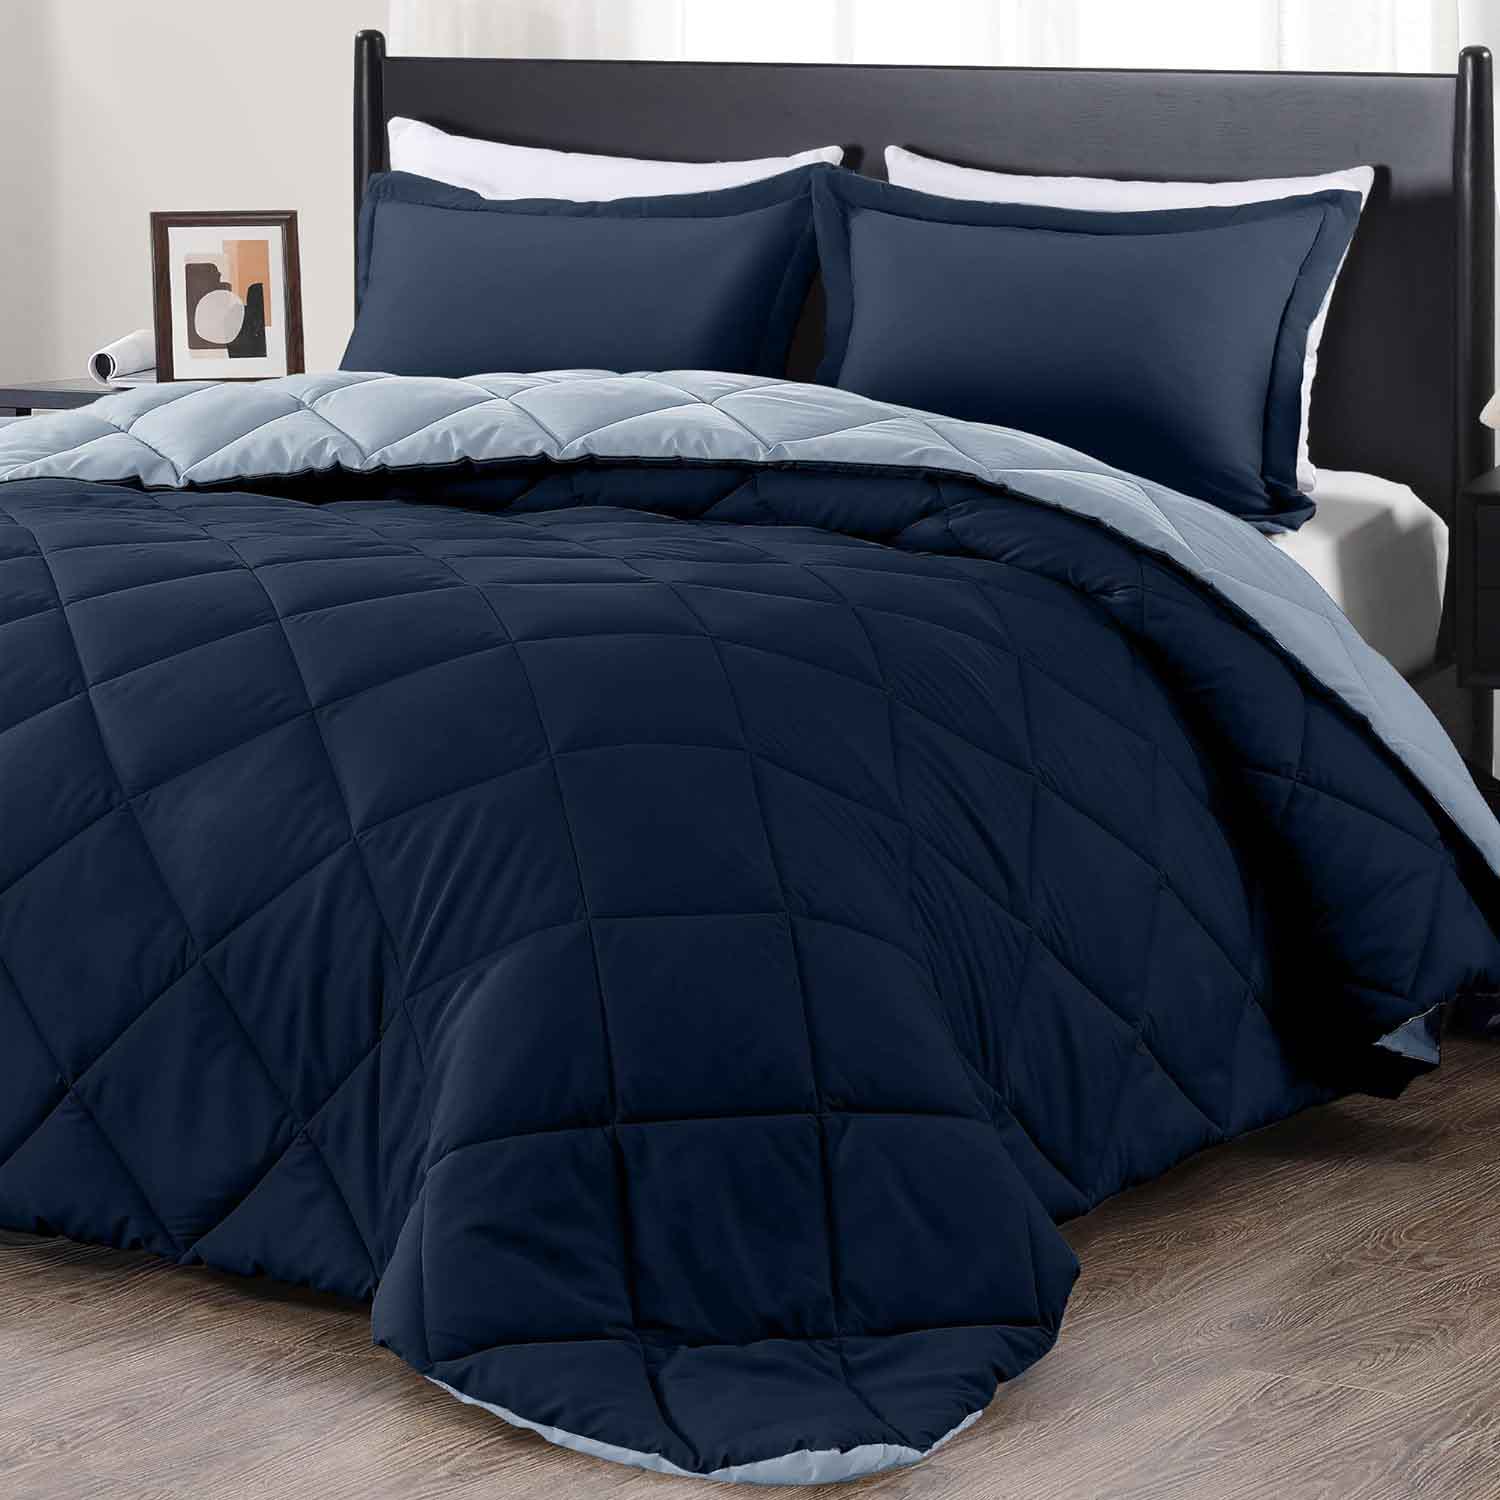 downluxe king Comforter Set in blue